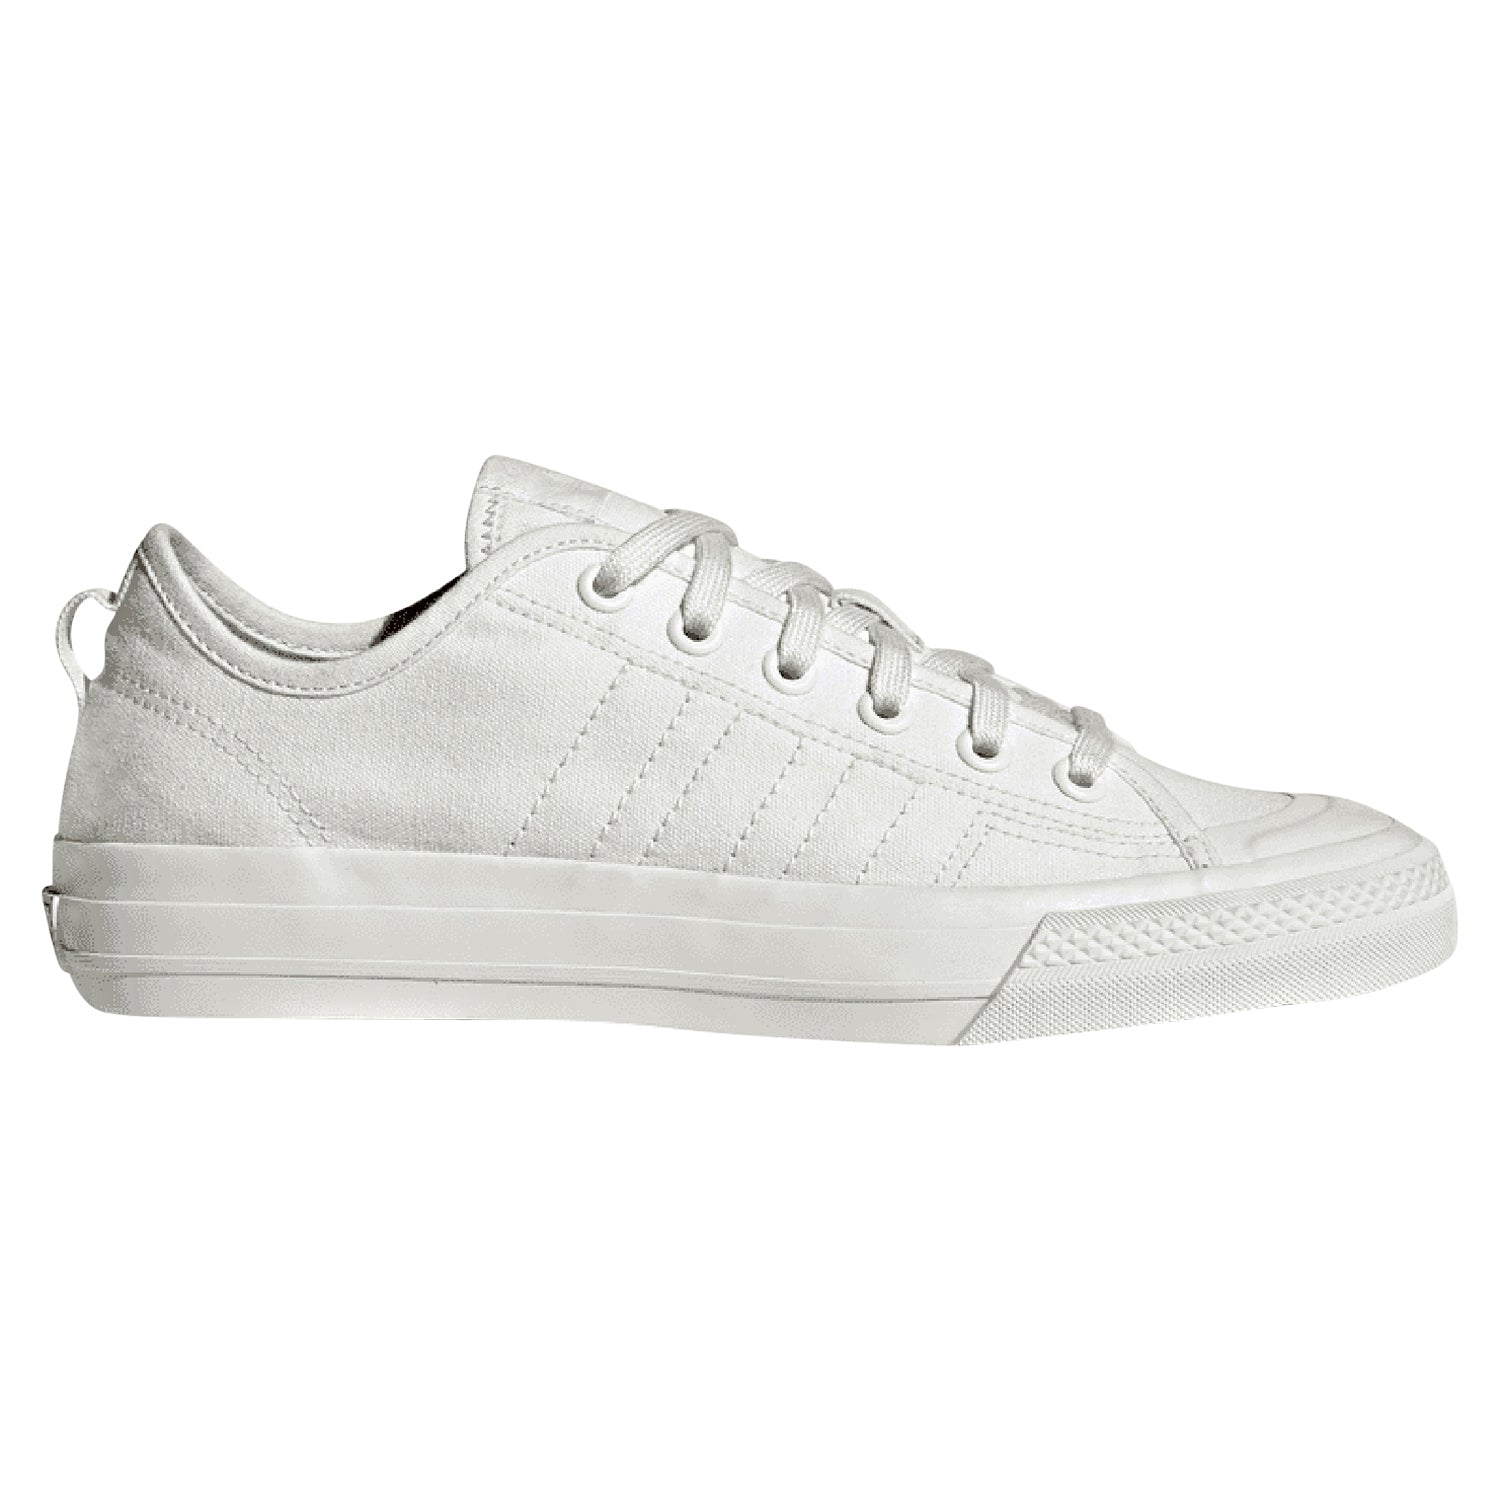 adidas white canvas shoes mens